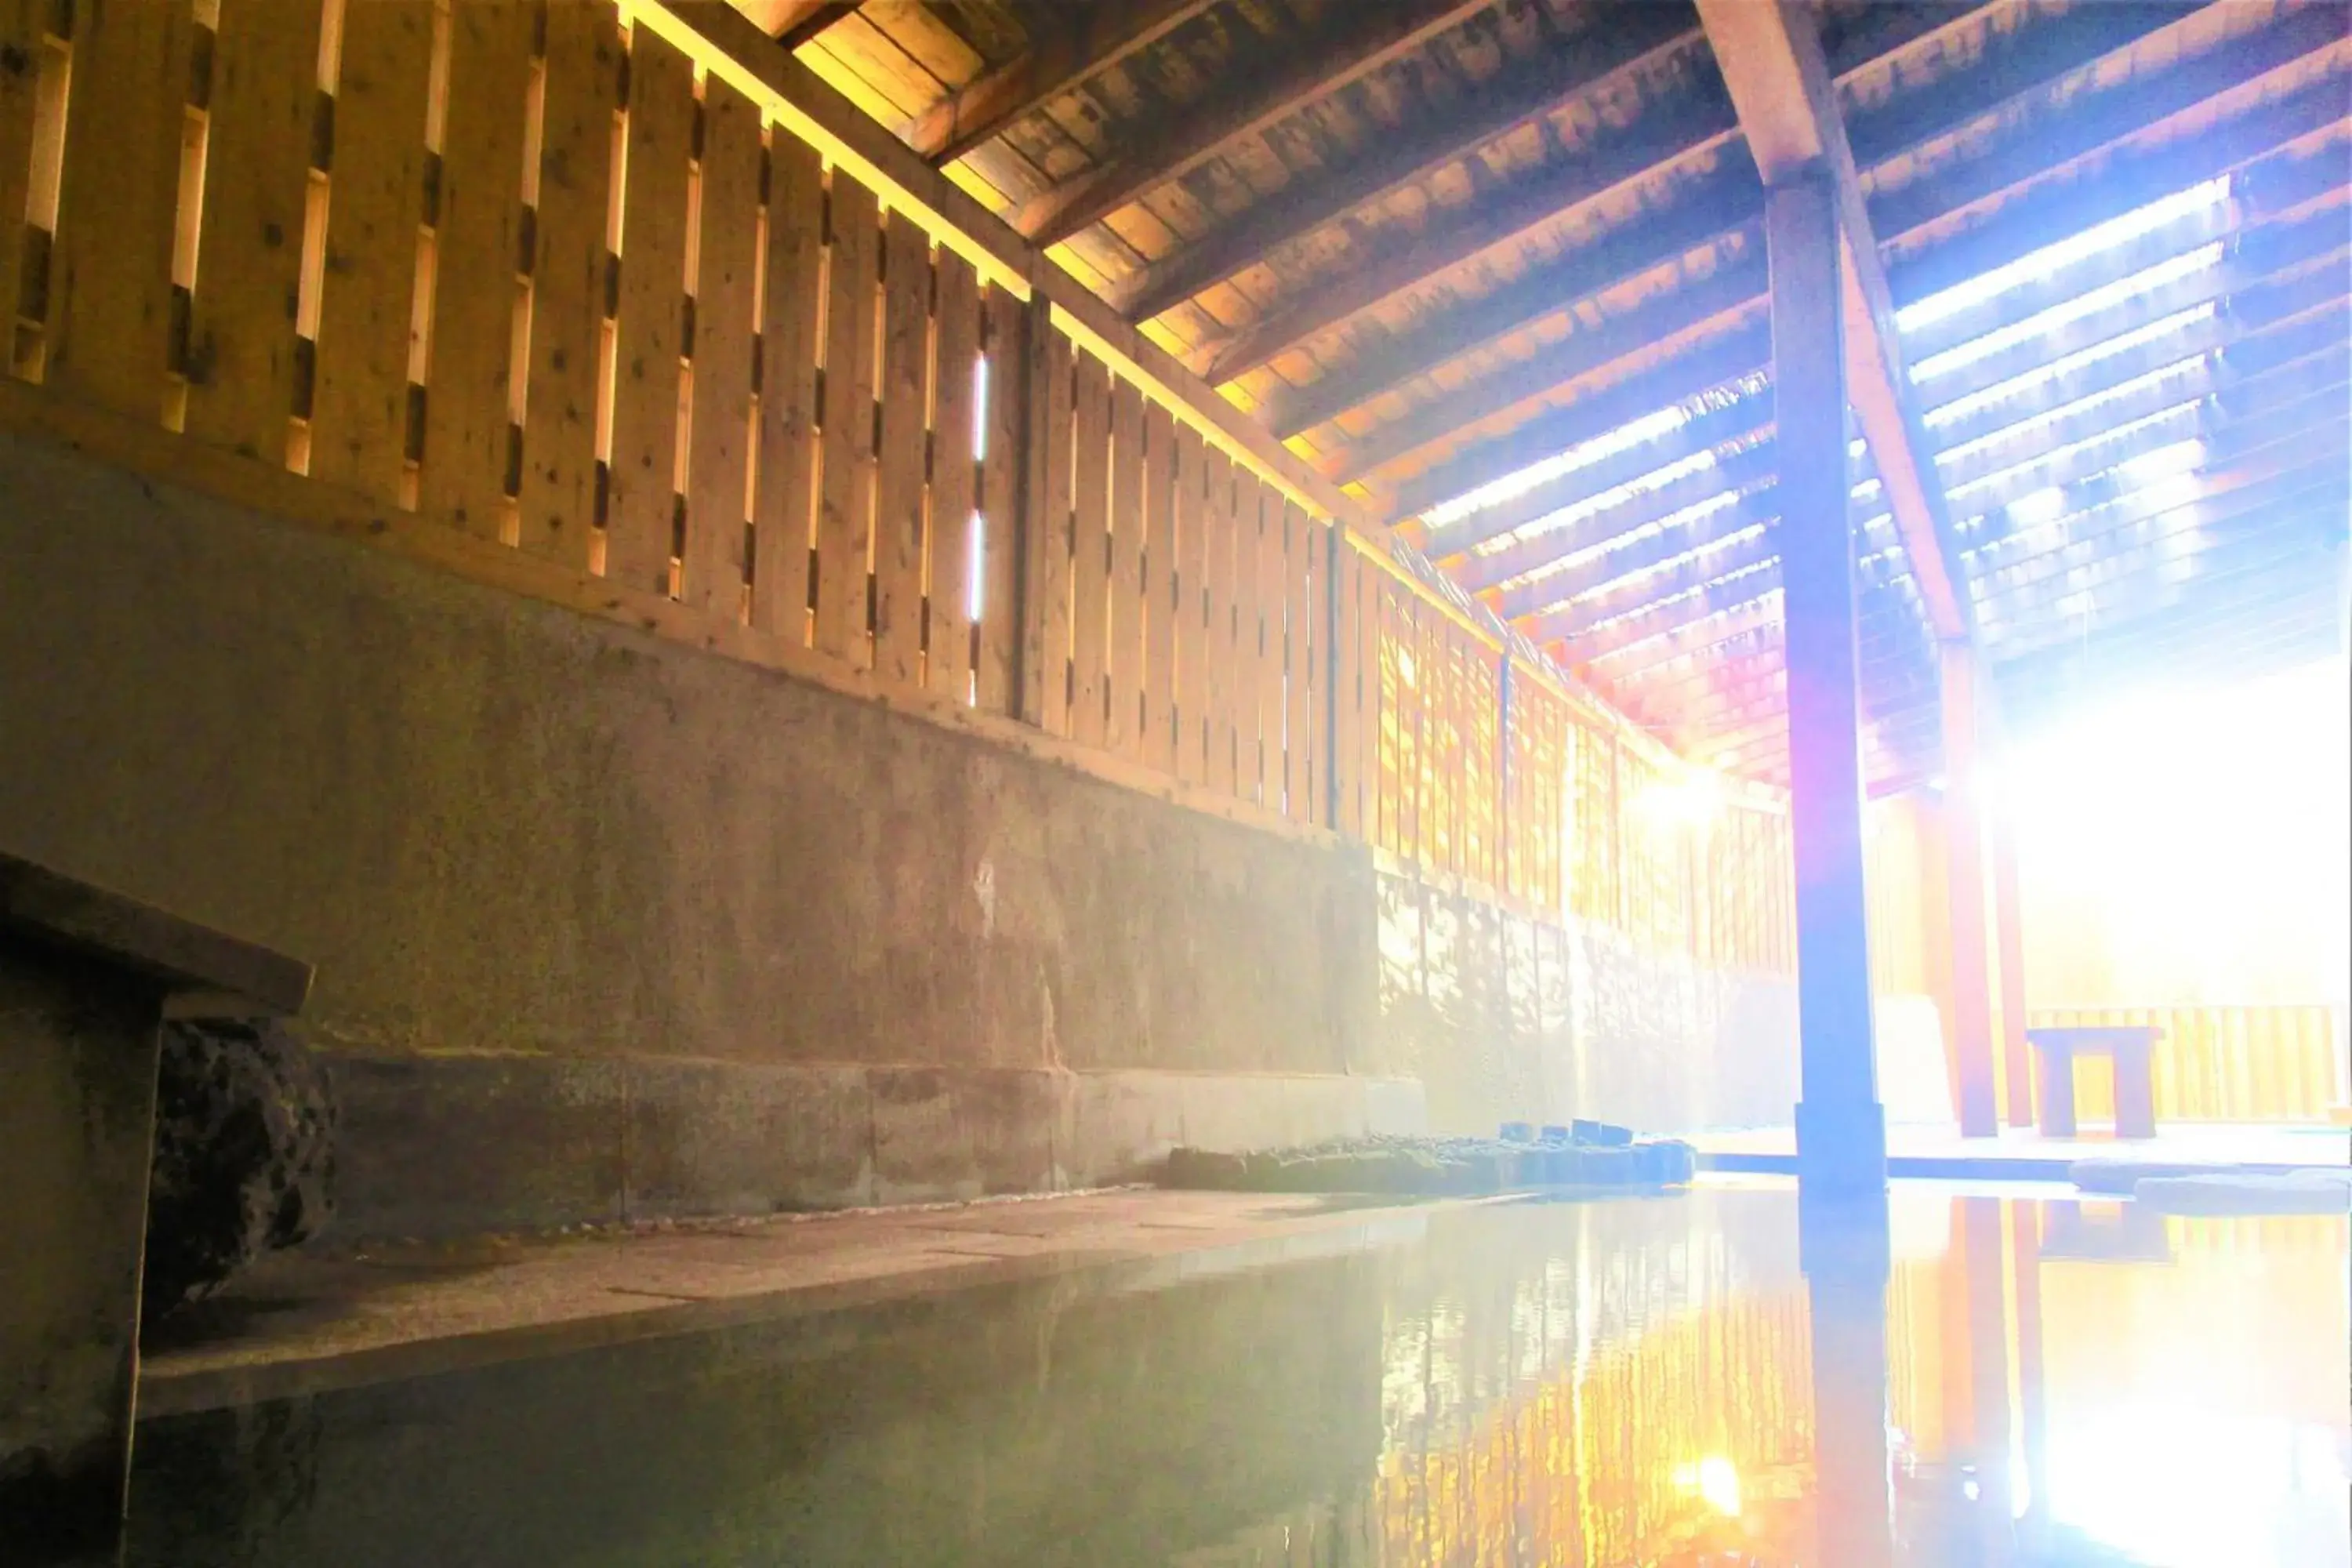 Hot Spring Bath, Swimming Pool in Kusatsu Onsen Daitokan